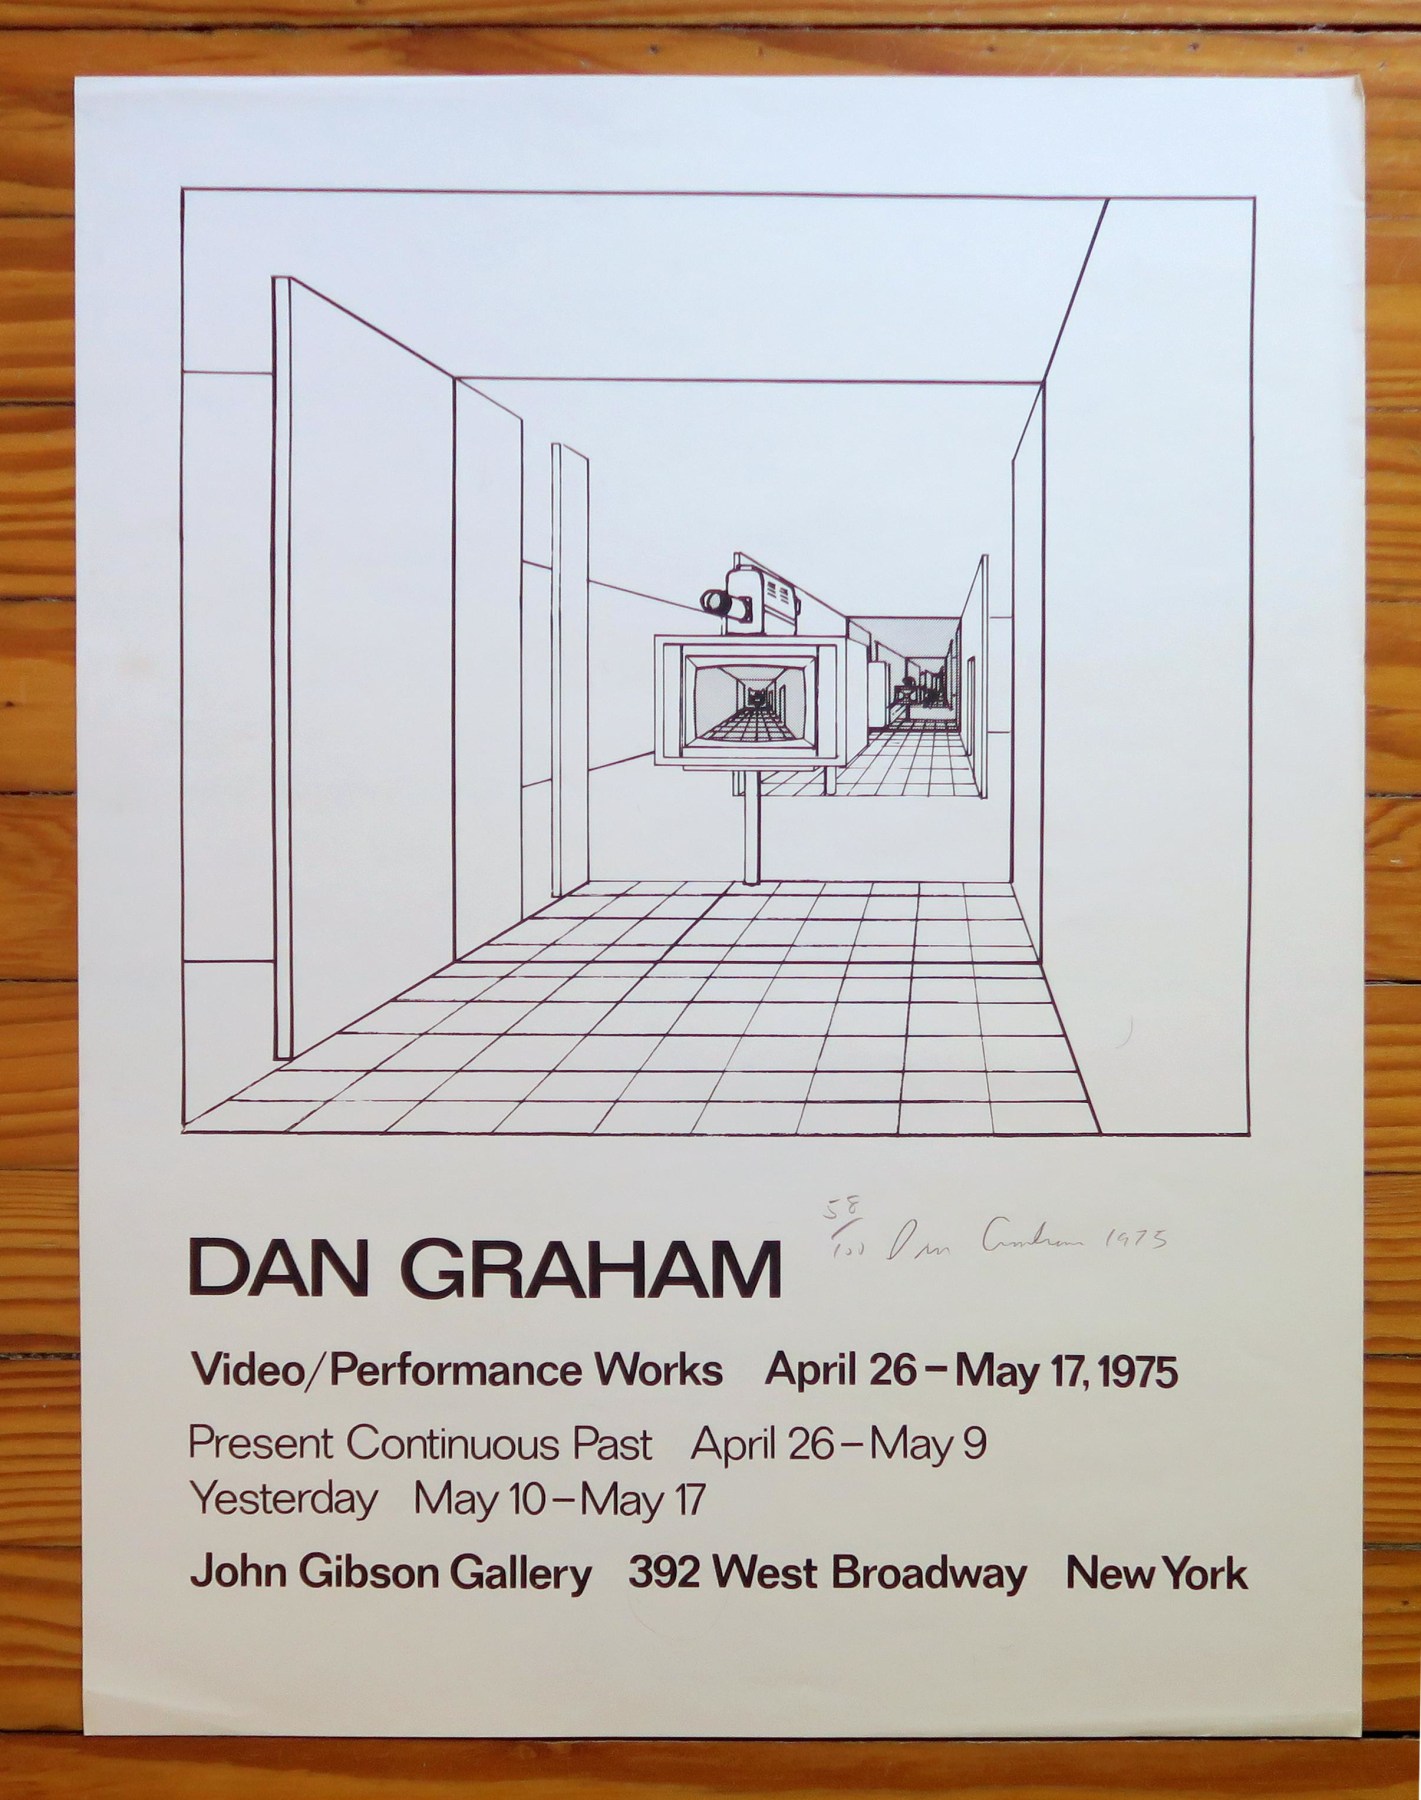 Alternate Projects, Dan Graham: Video/Performance Works